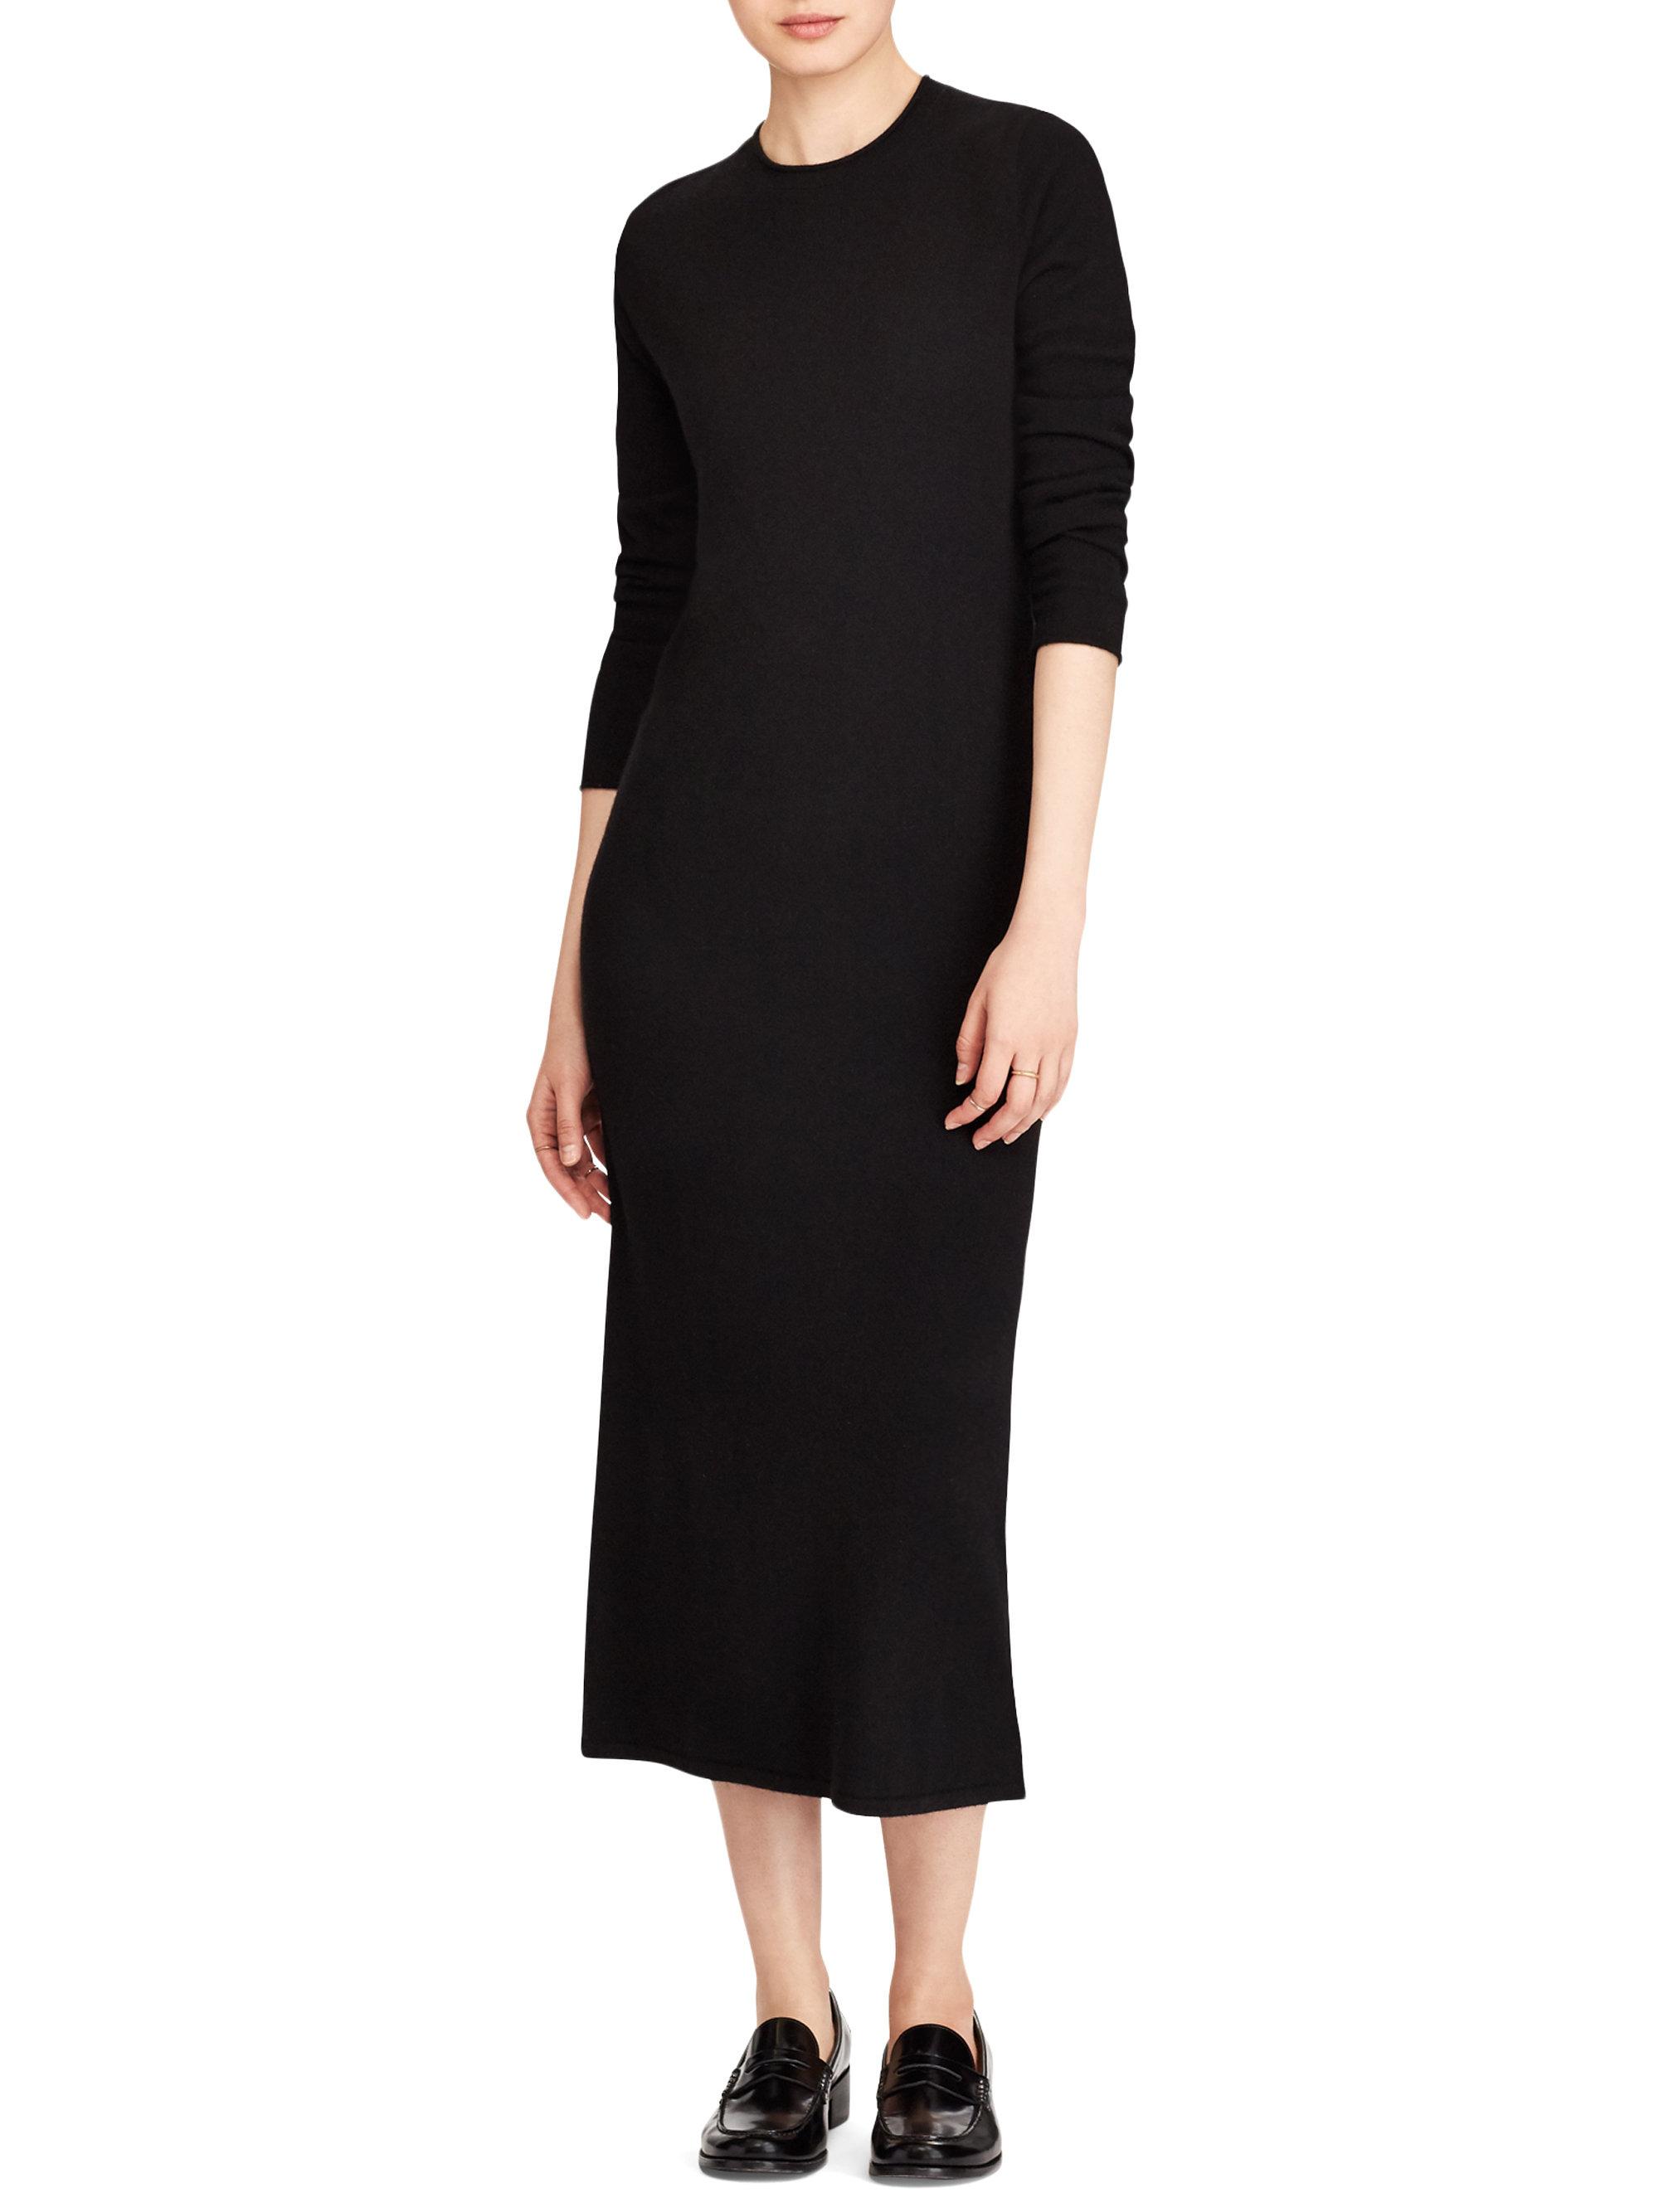 Polo Ralph Lauren Long Cashmere Dress in Black - Lyst